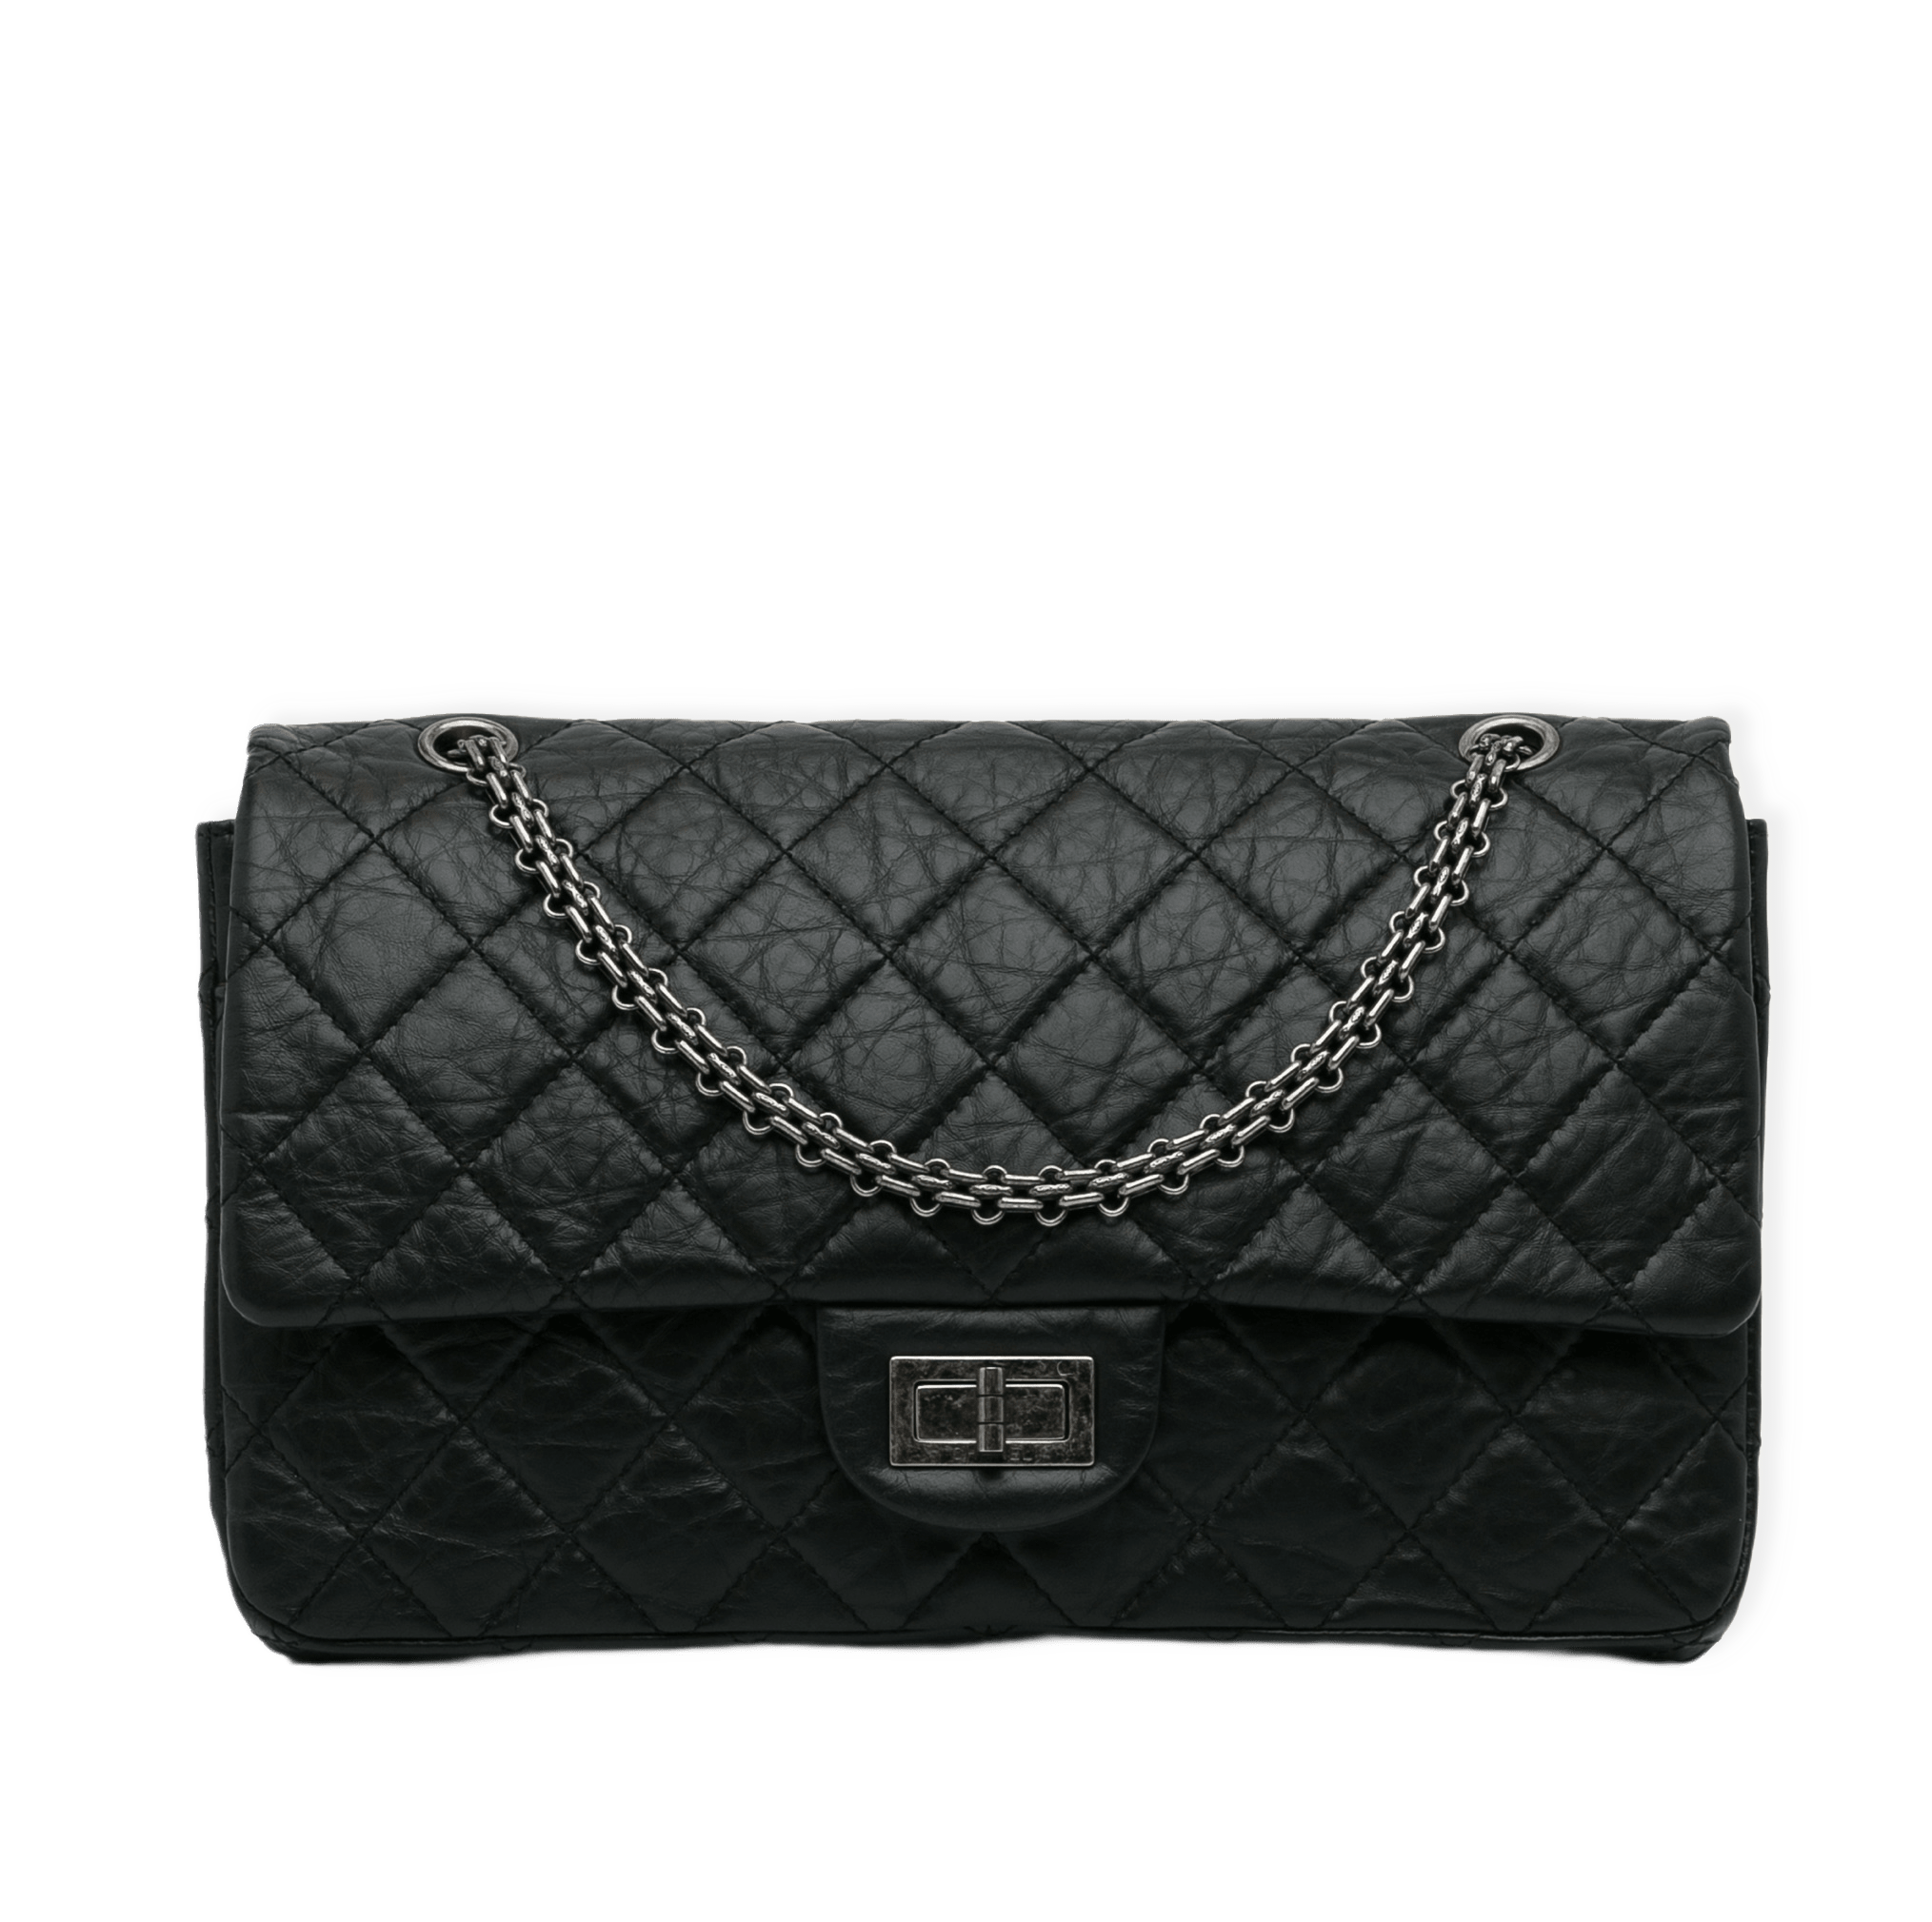 Chanel Reissue 2.55 Aged Calfskin Double Flap 227 från Luxclusif